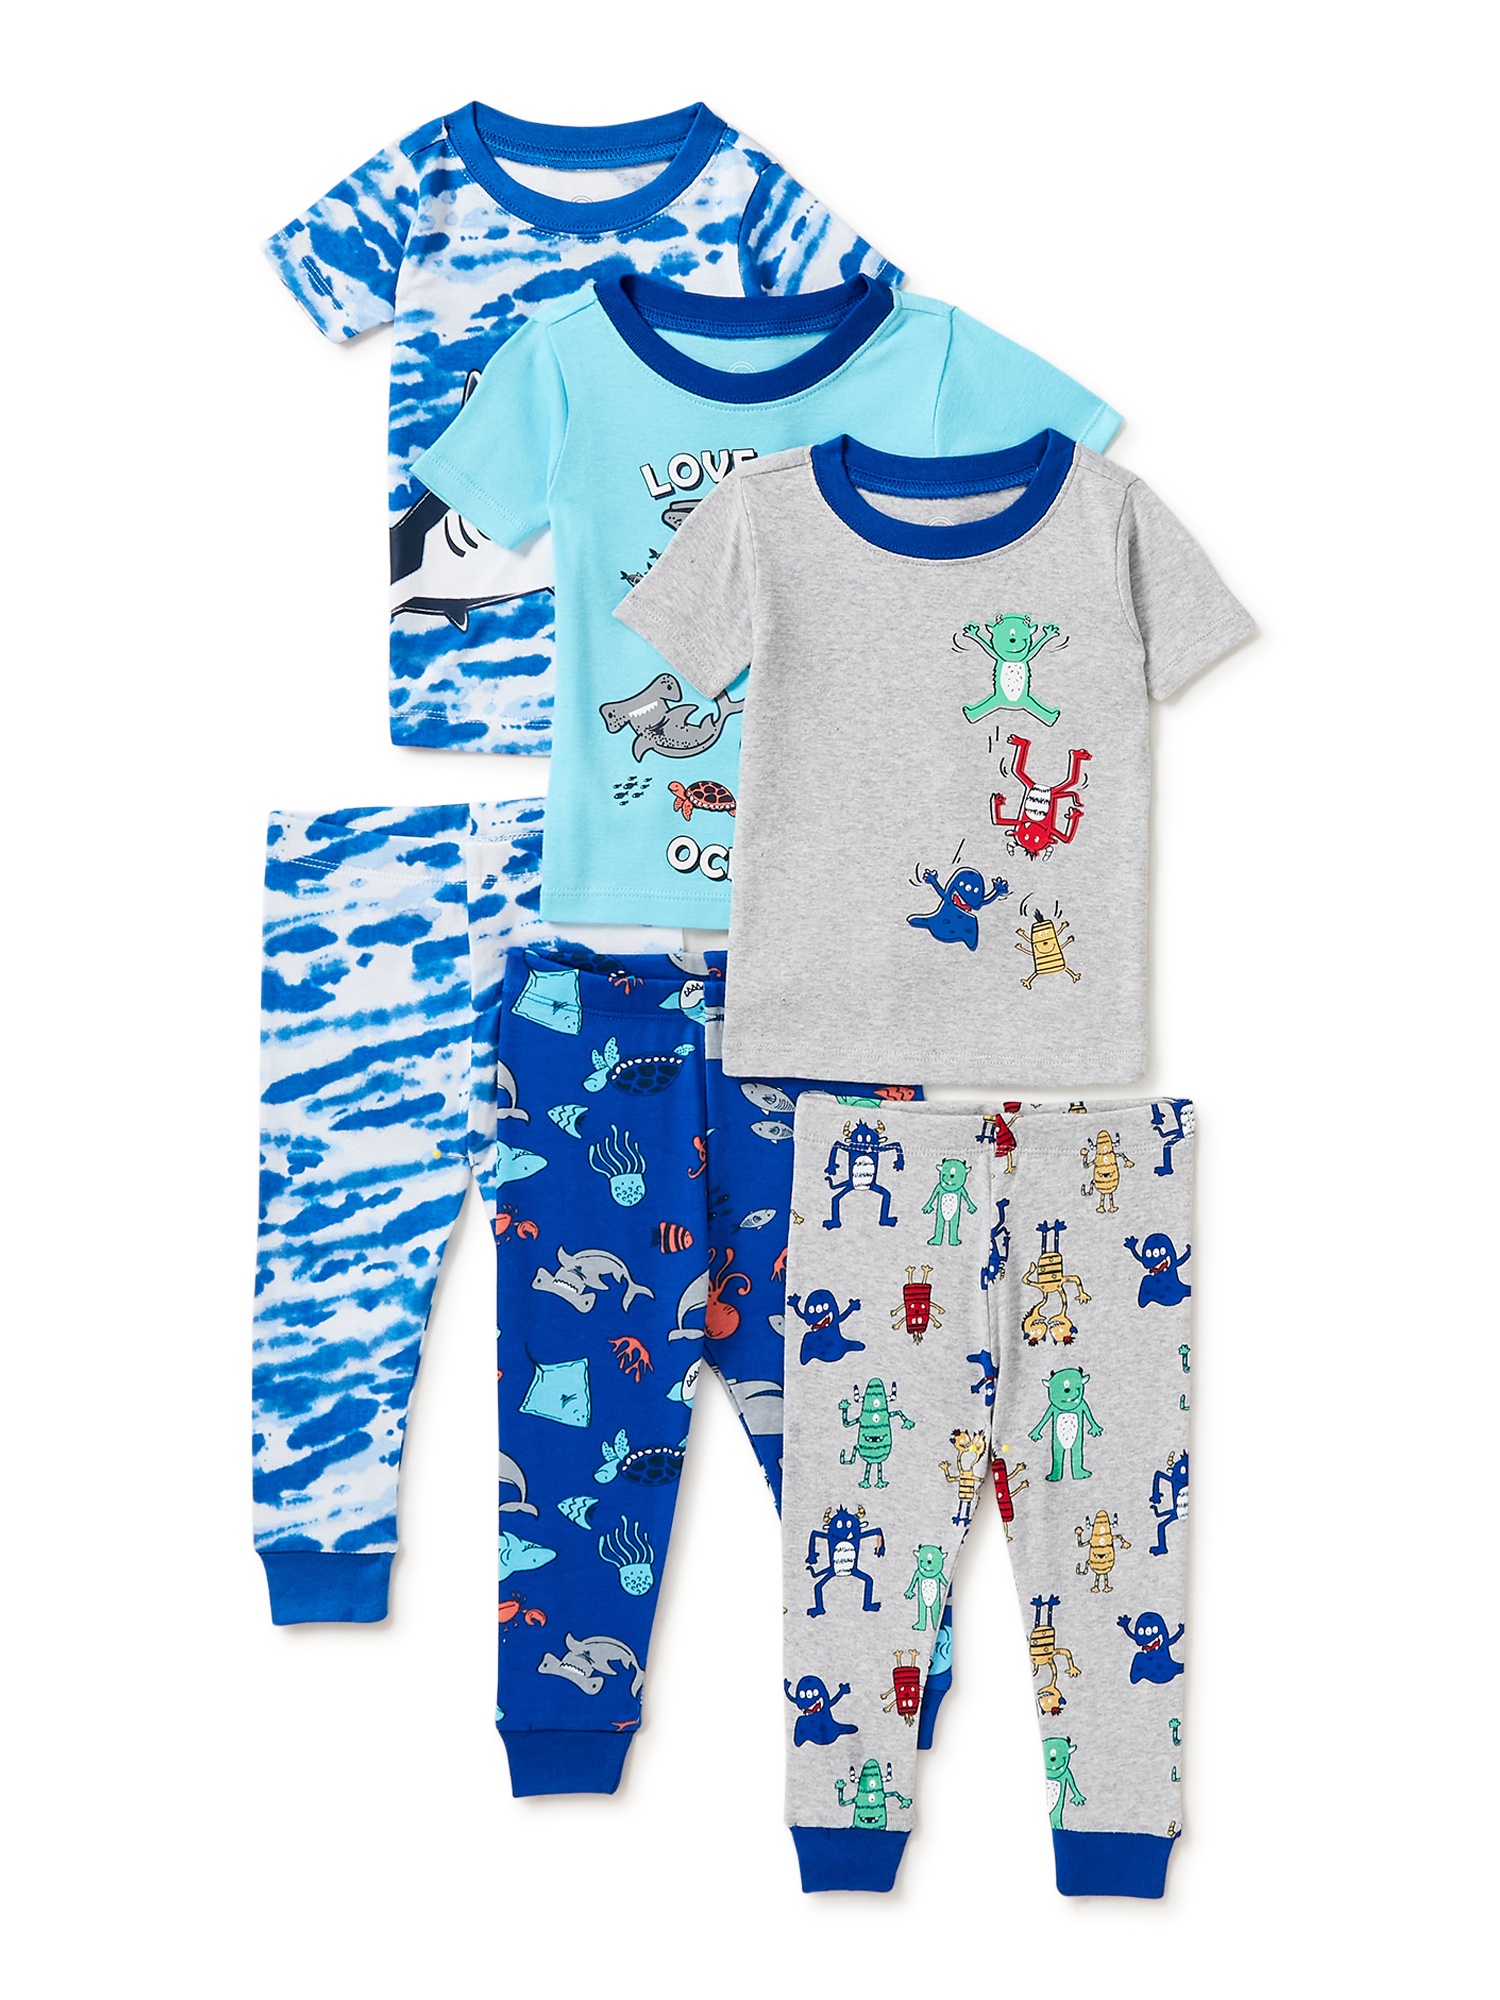 Wonder Nation Short Sleeve Crew Neck Graphic Prints Pajamas (Little Boys or Big Boys) 6 Piece Set - image 1 of 5